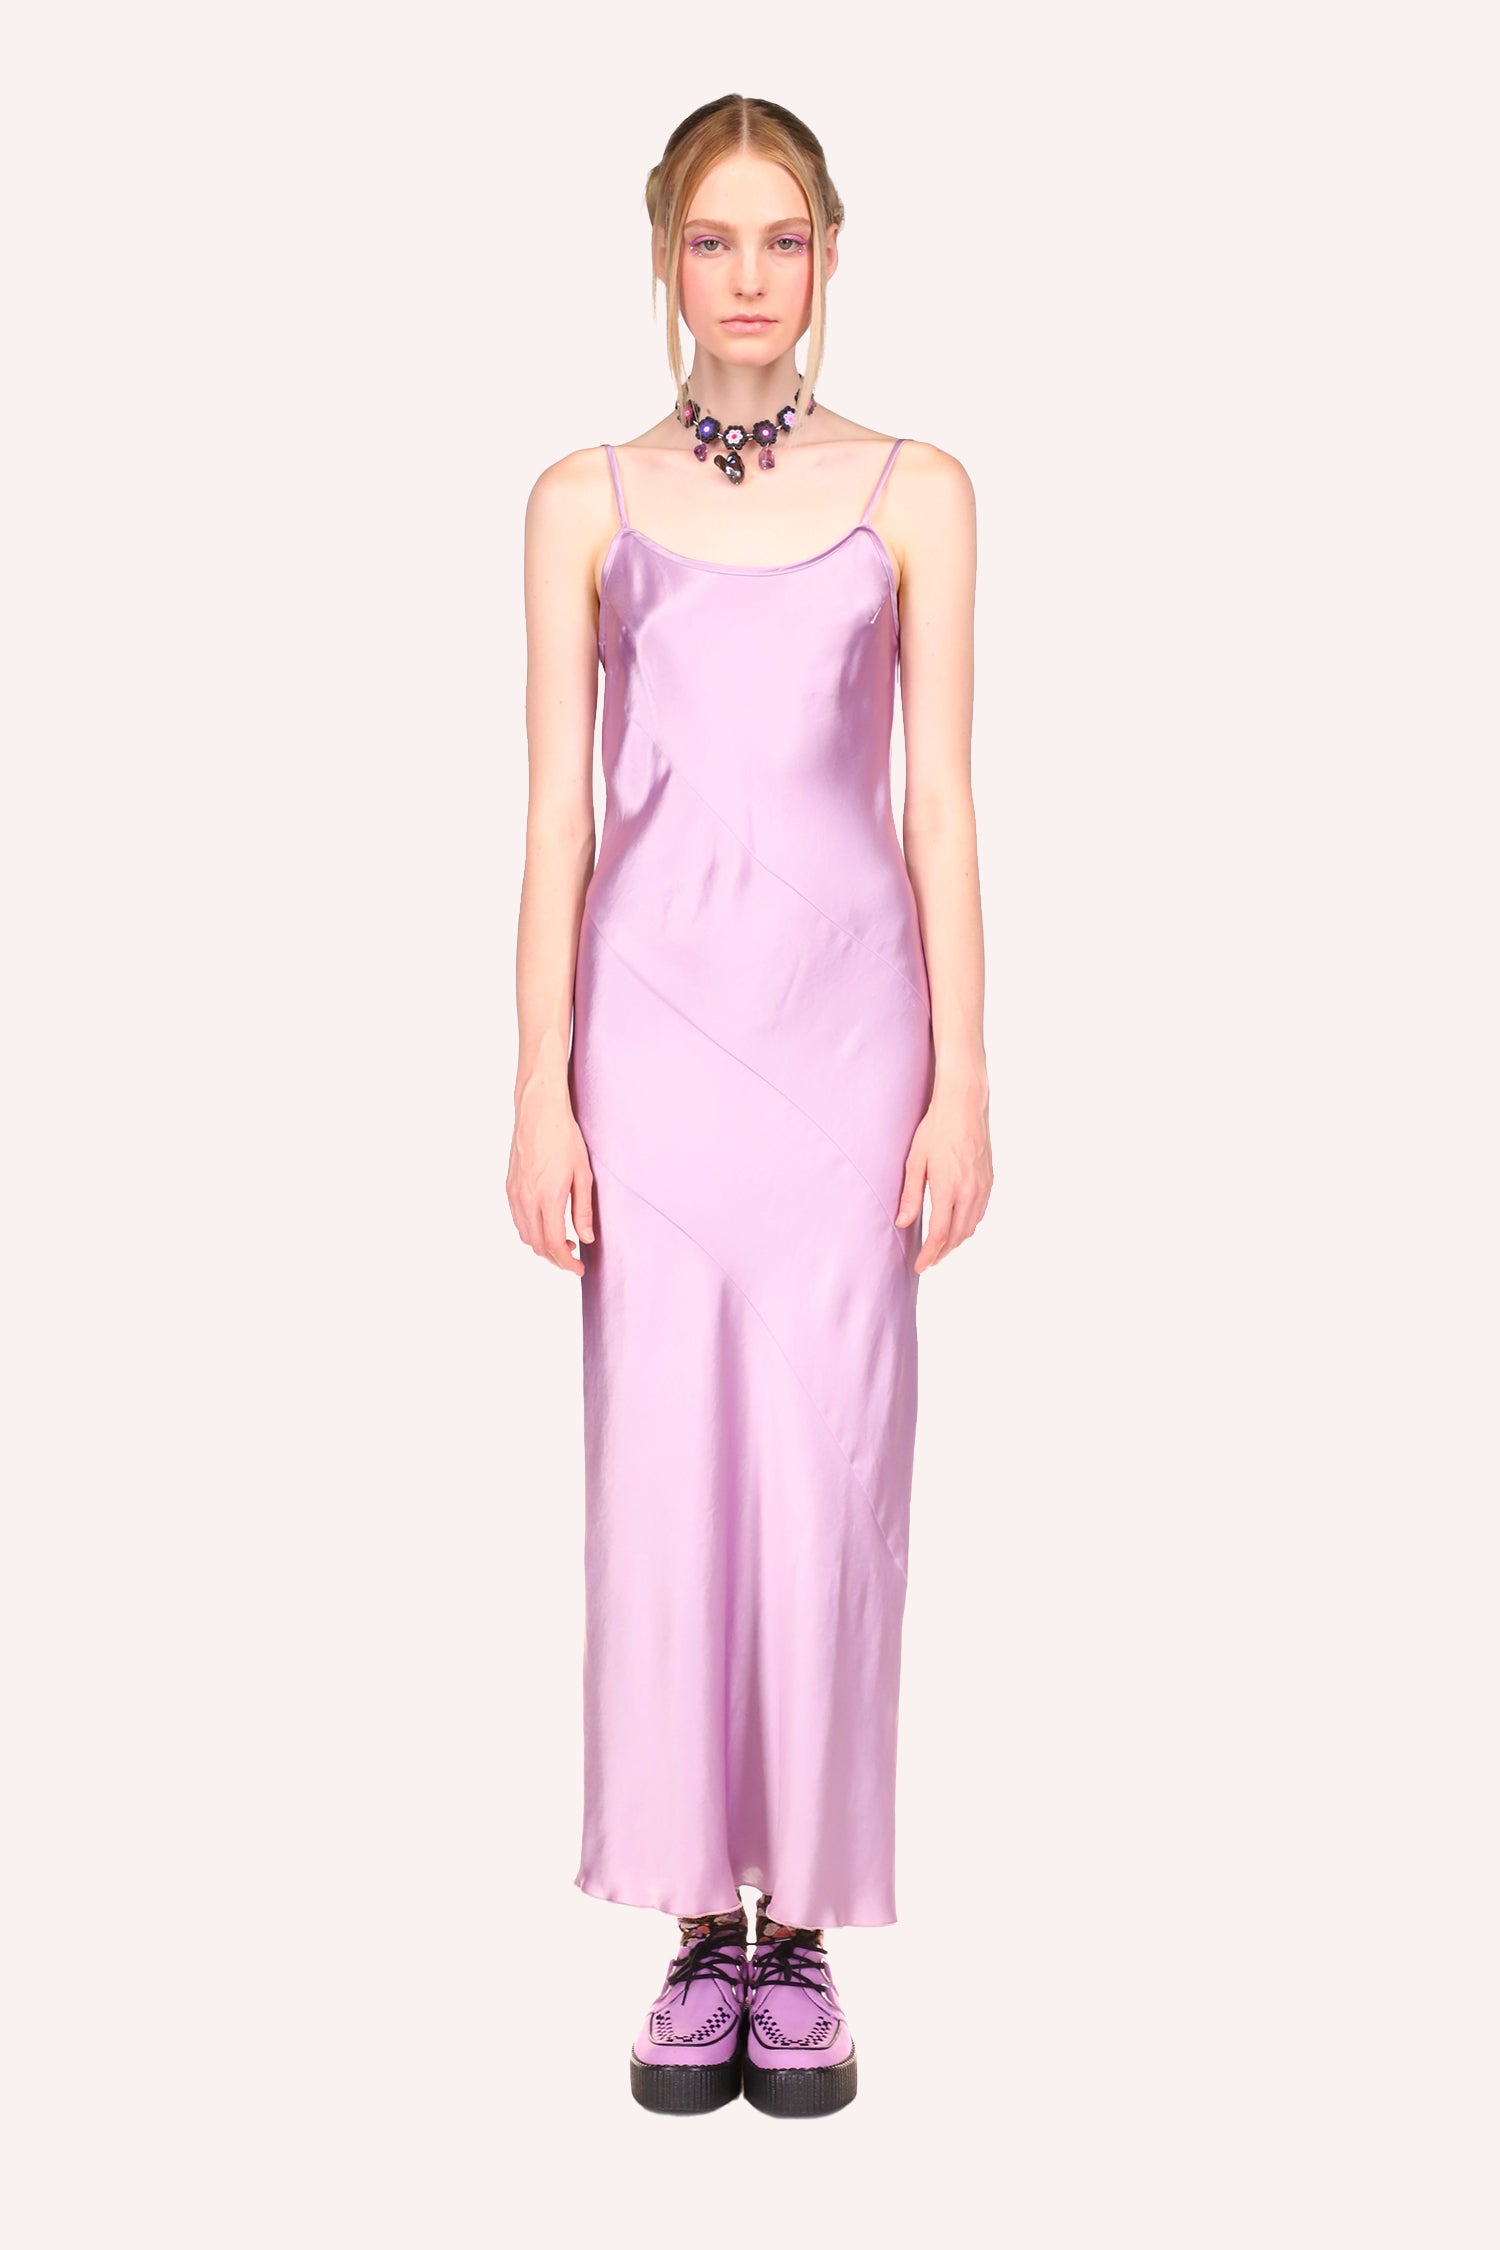 Satin Slip Dress lavender, sleeveless 2-straps, round collar cut, ankle long, and a diagonal wrap